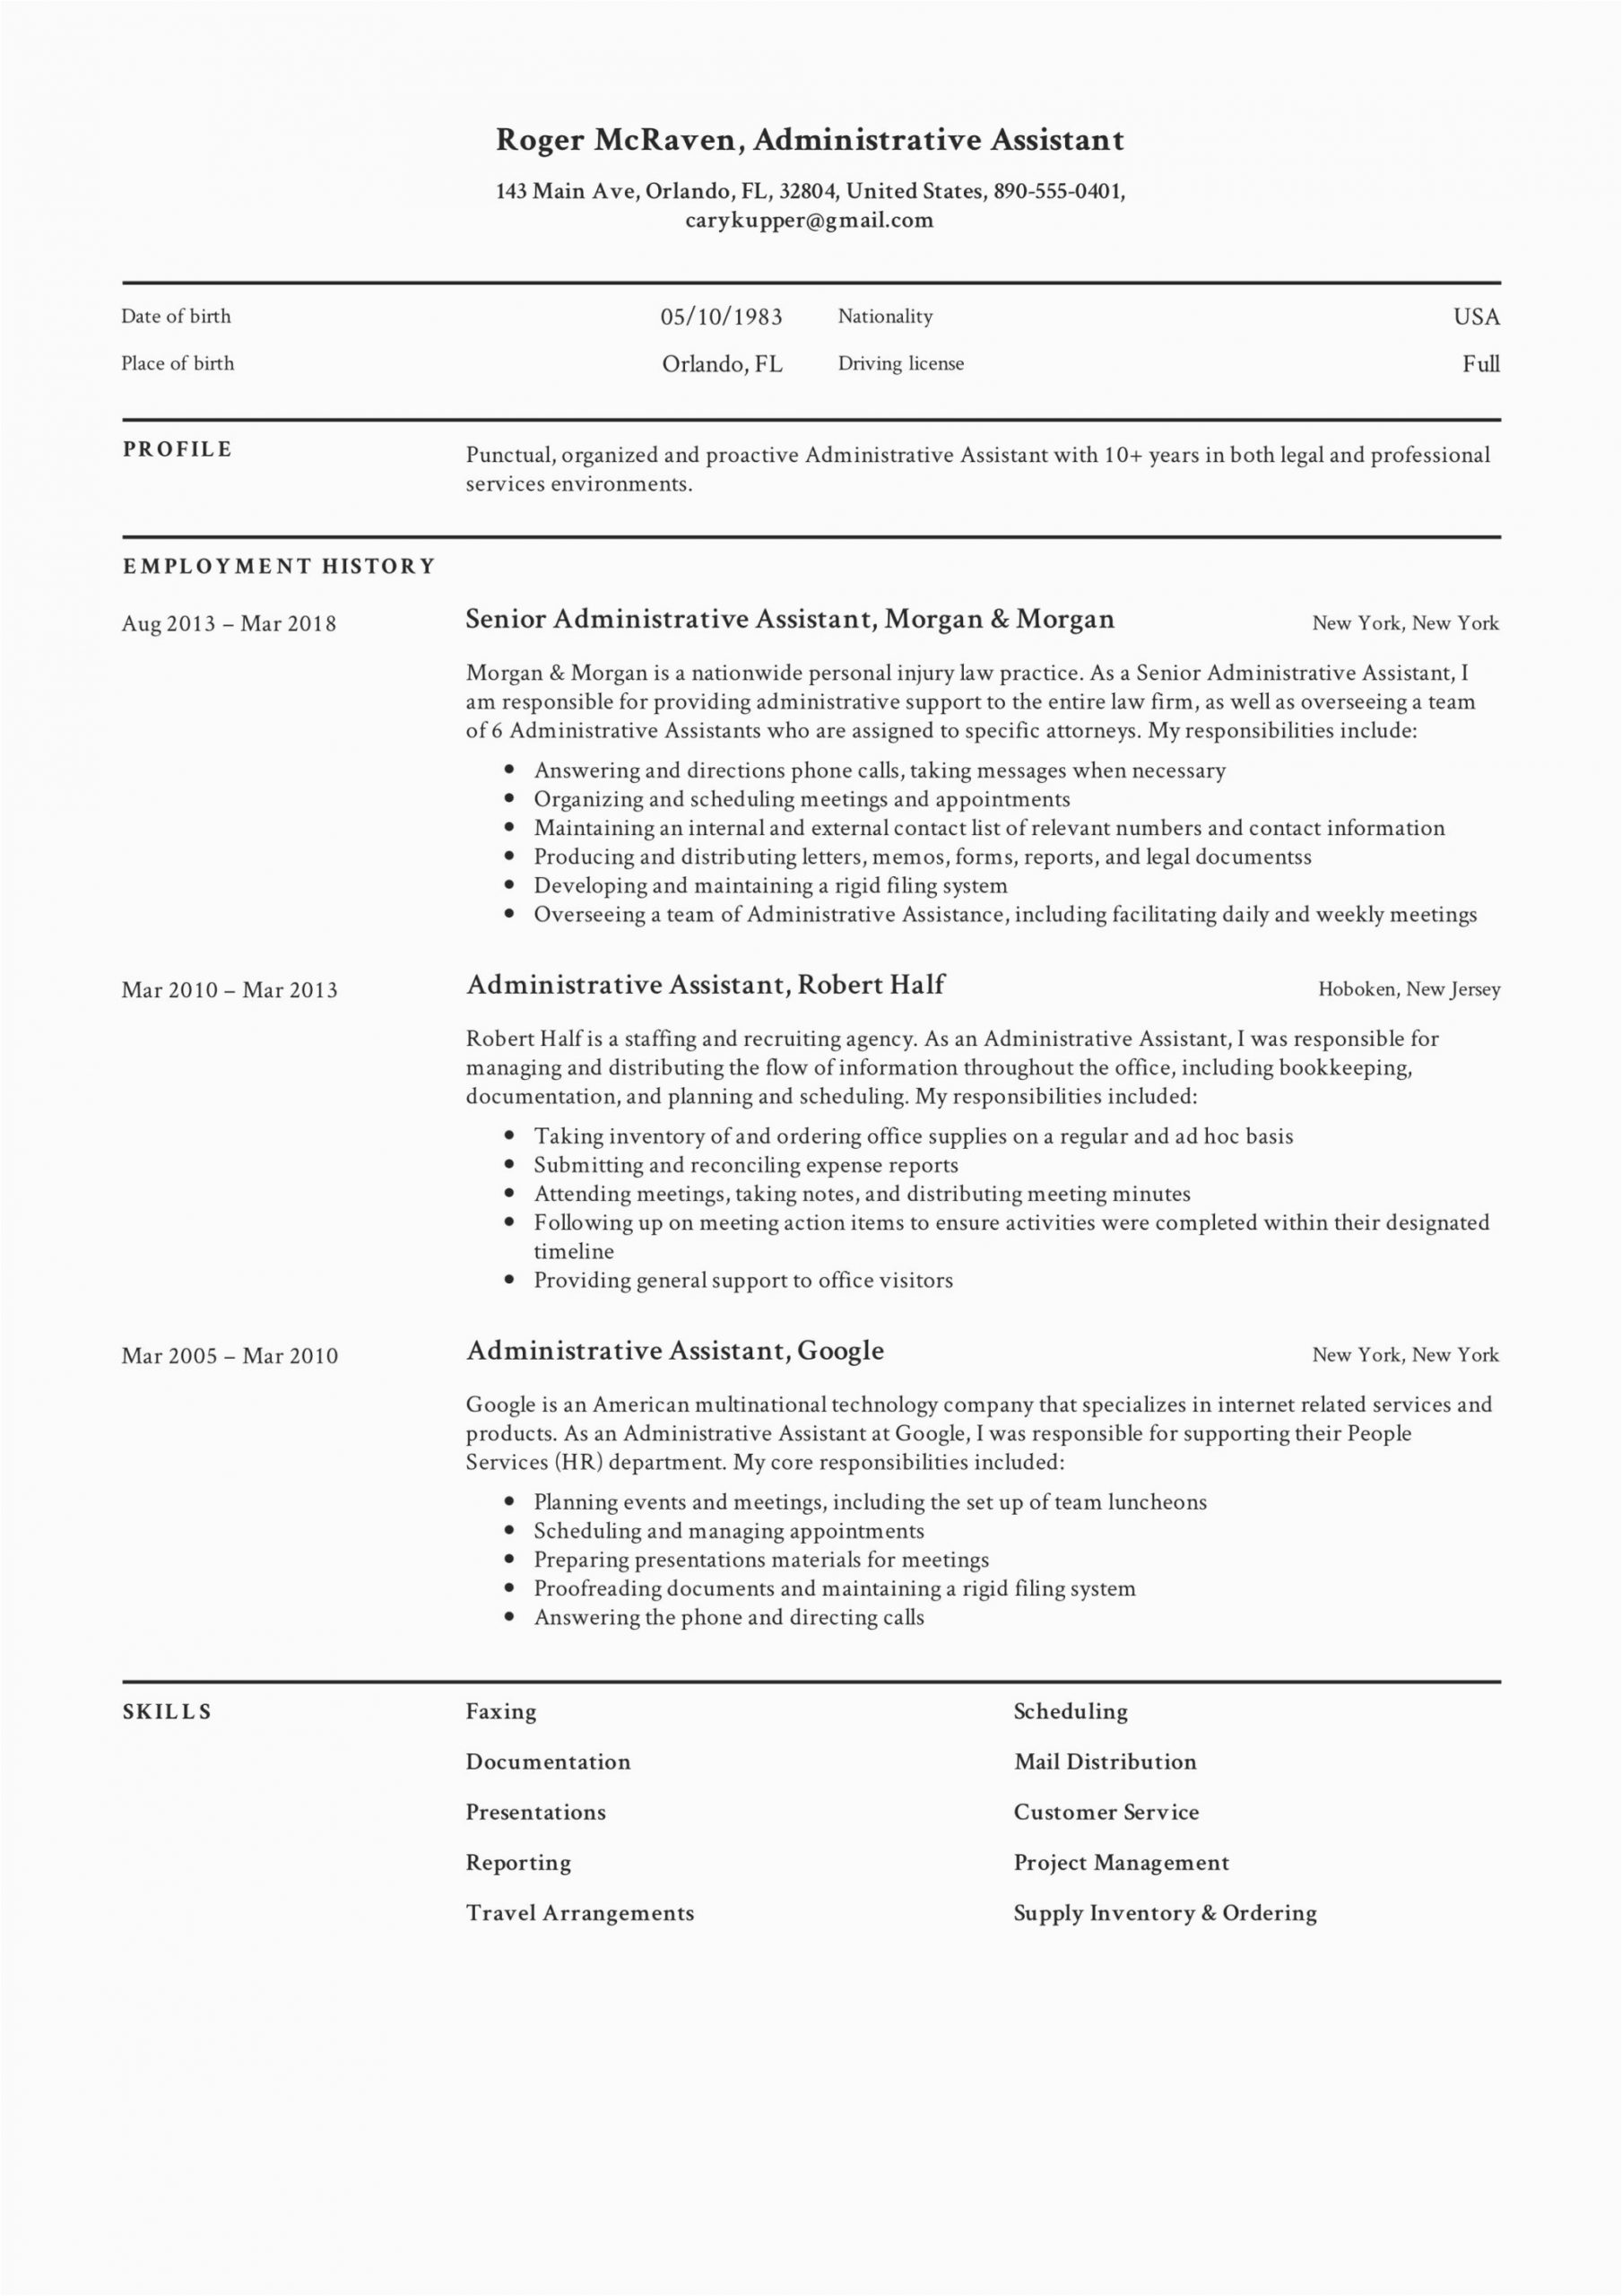 Resume Objective Samples for Administrative assistant Full Guide Administrative assistant Resume [ 12 Samples